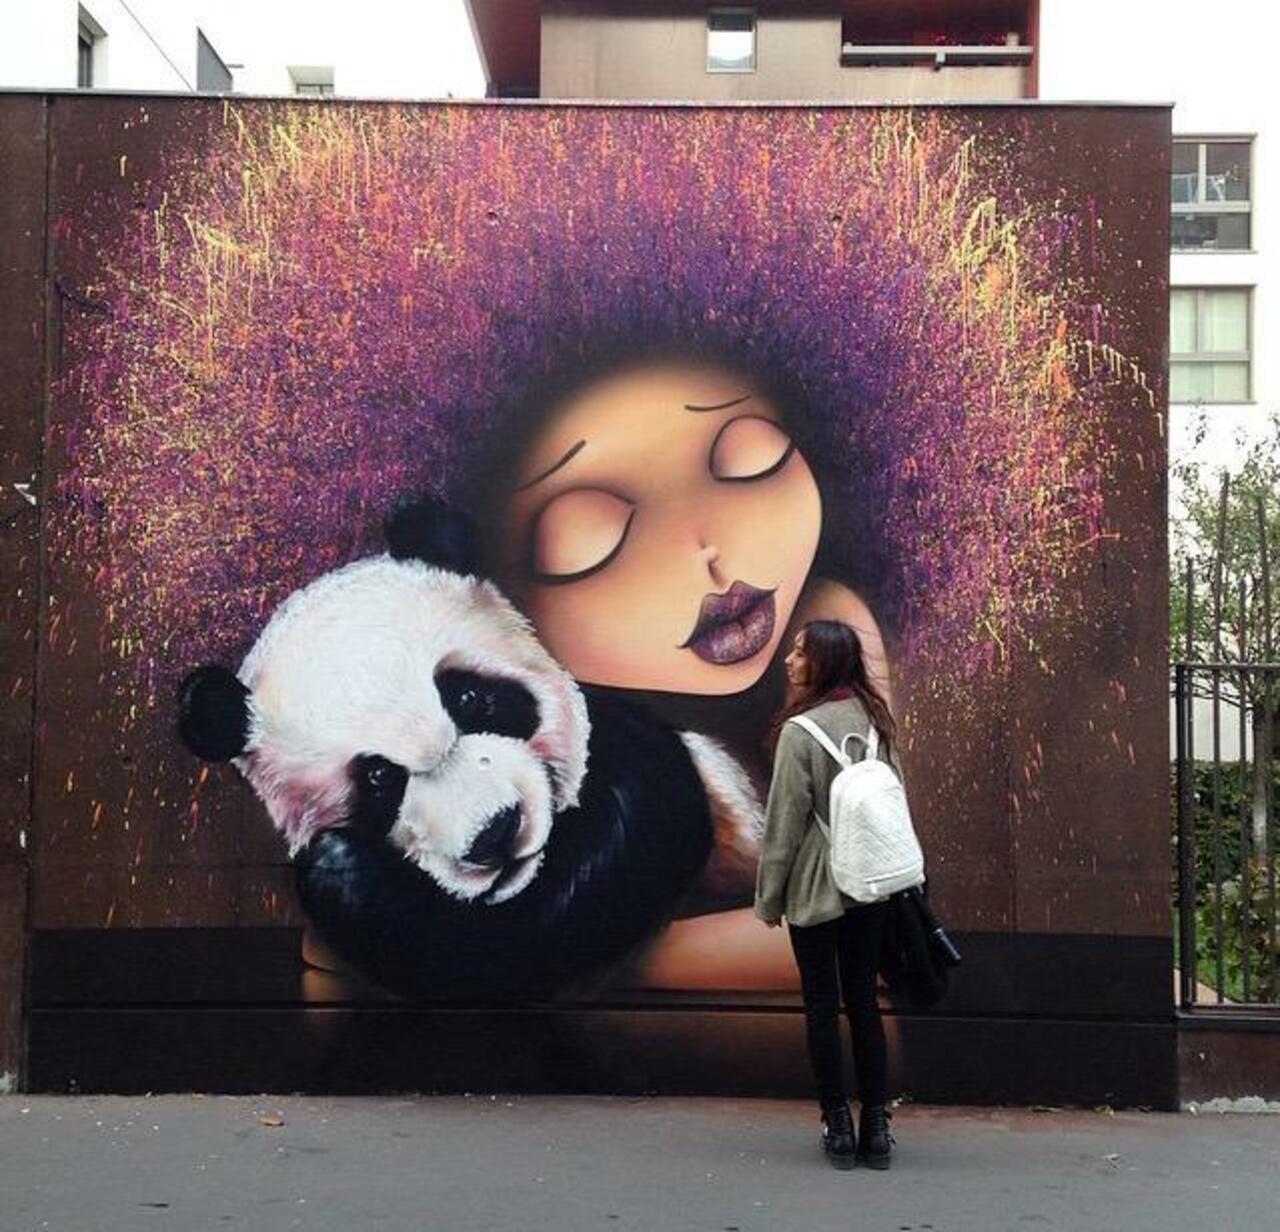 RT @charlesjackso14: Street Art by VinieGraffiti in Paris 

#art #graffiti #mural #streetart http://t.co/X6cKTzxRPV http://twitter.com/GoogleStreetArt/status/654014419924557824/photo/1/large?utm_source=fb&utm_medium=fb&utm_campaign=charlesjackso14&utm_content=654281061782962176